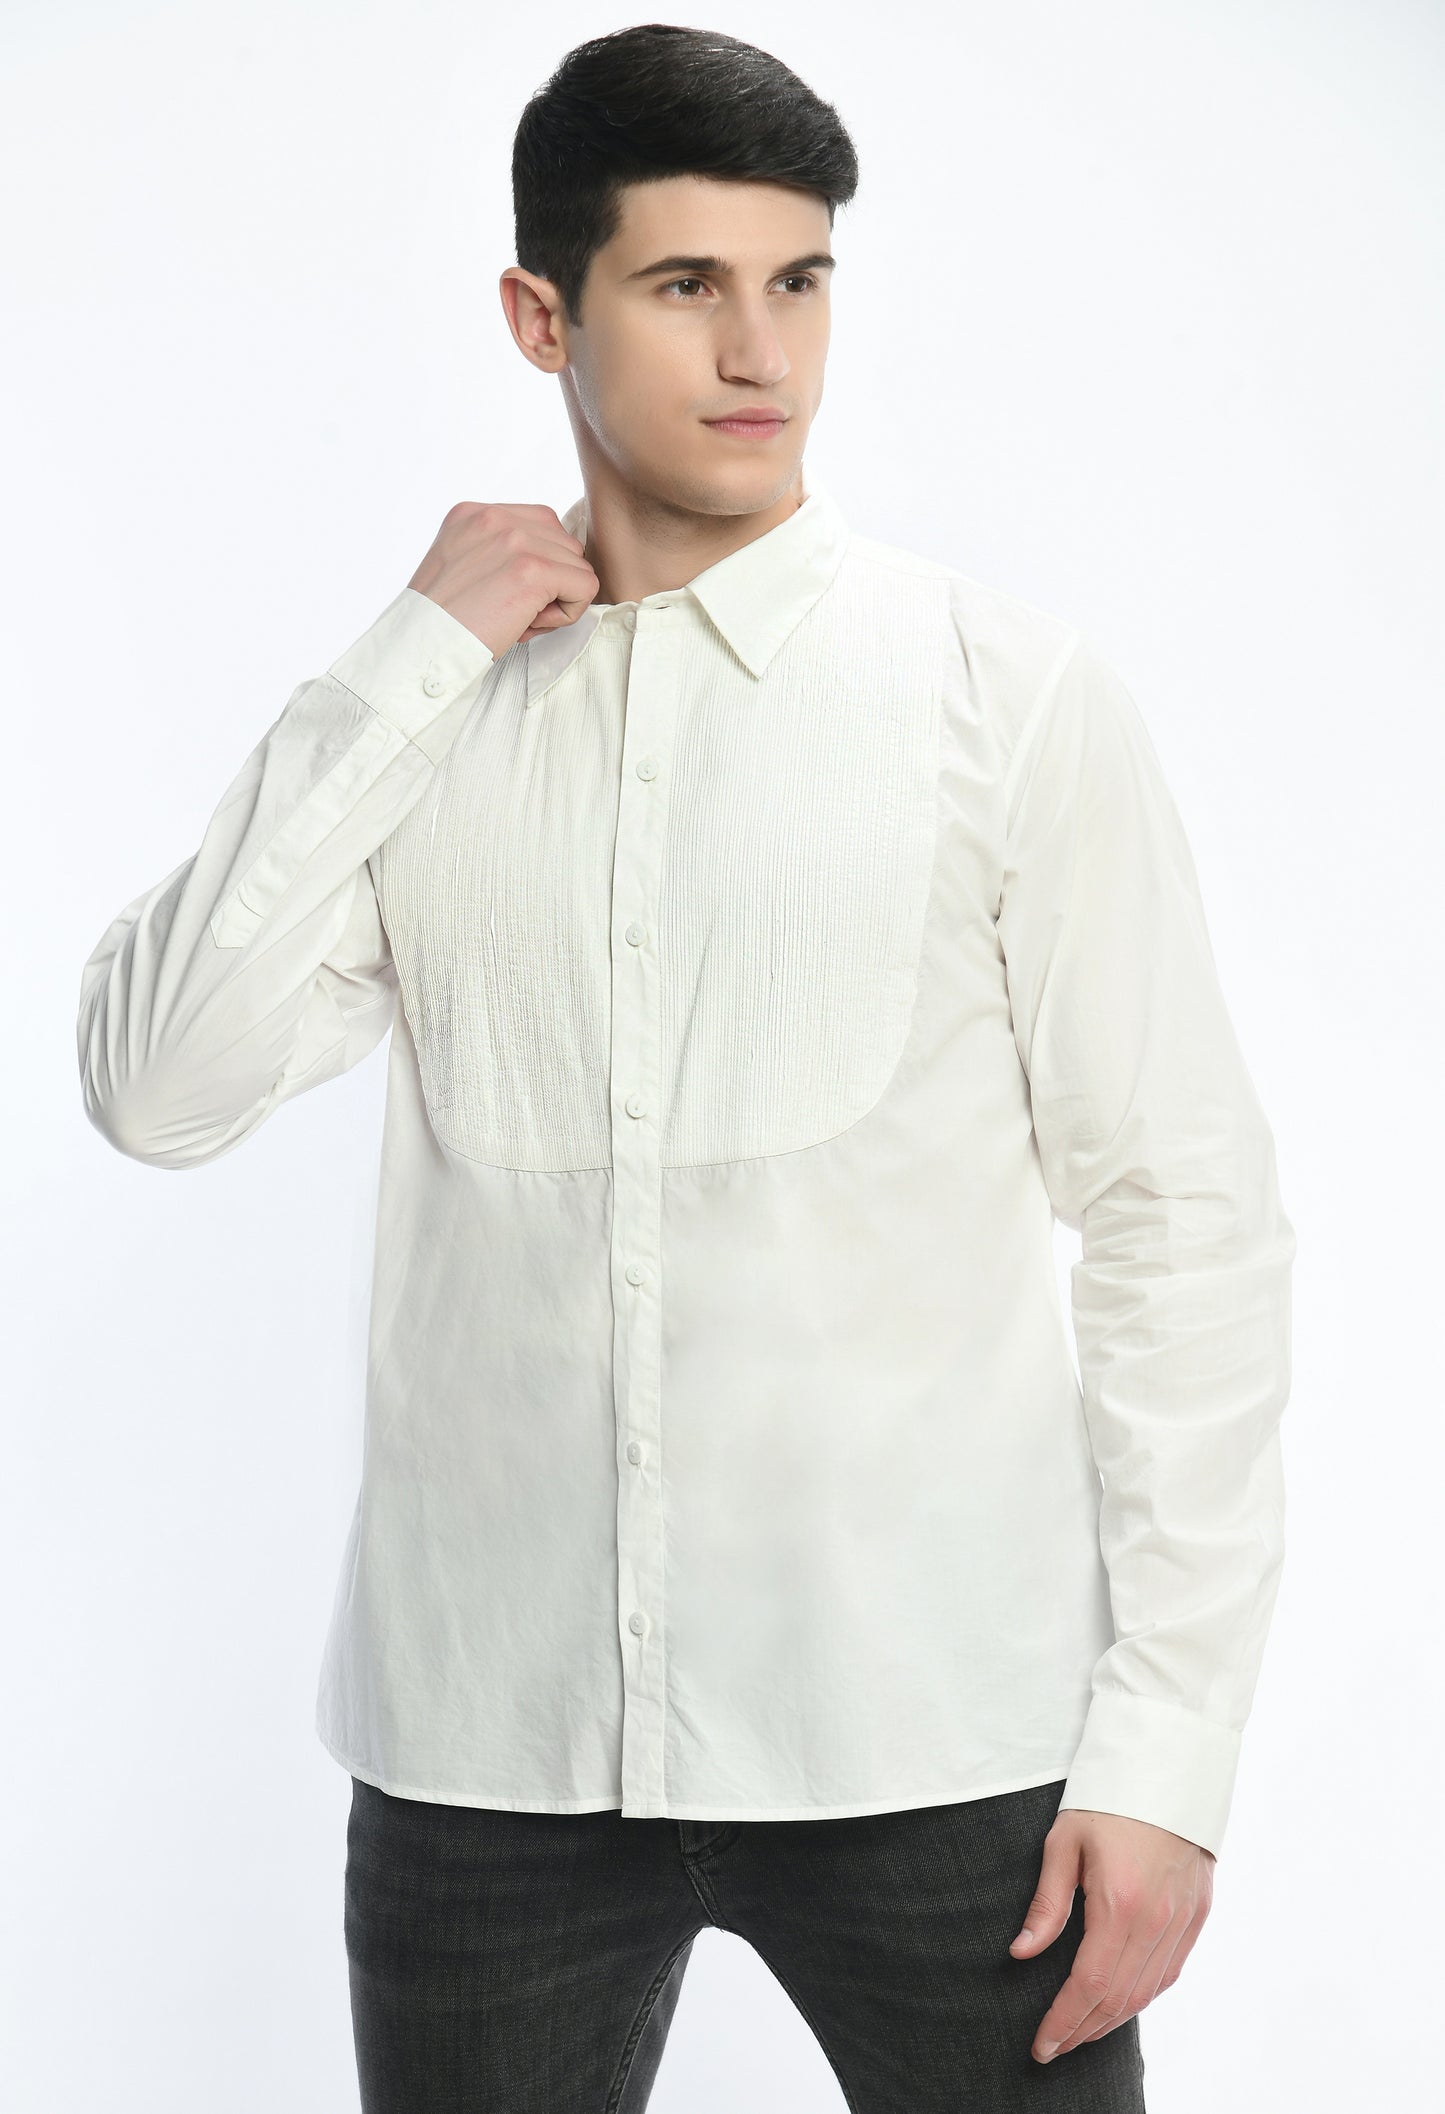 A white cotton shirt showcasing pintex around the neck.